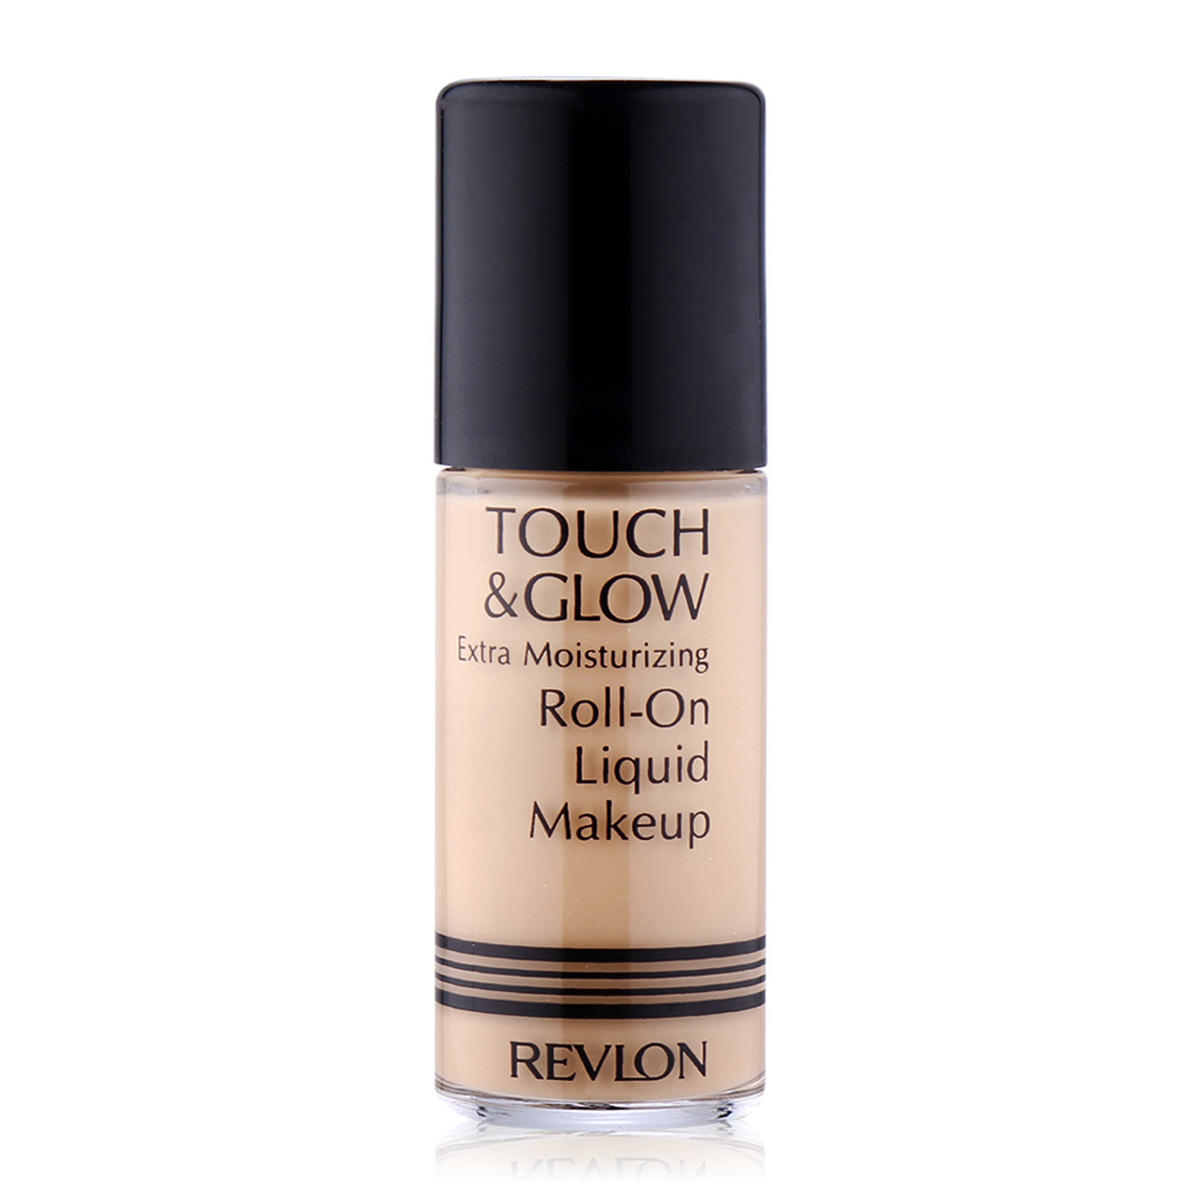 Revlon-Touch-Glow-Extra-Moisturizing-Roll-On-Liquid-Makeup-Creamy-Ivory-sfw(1)